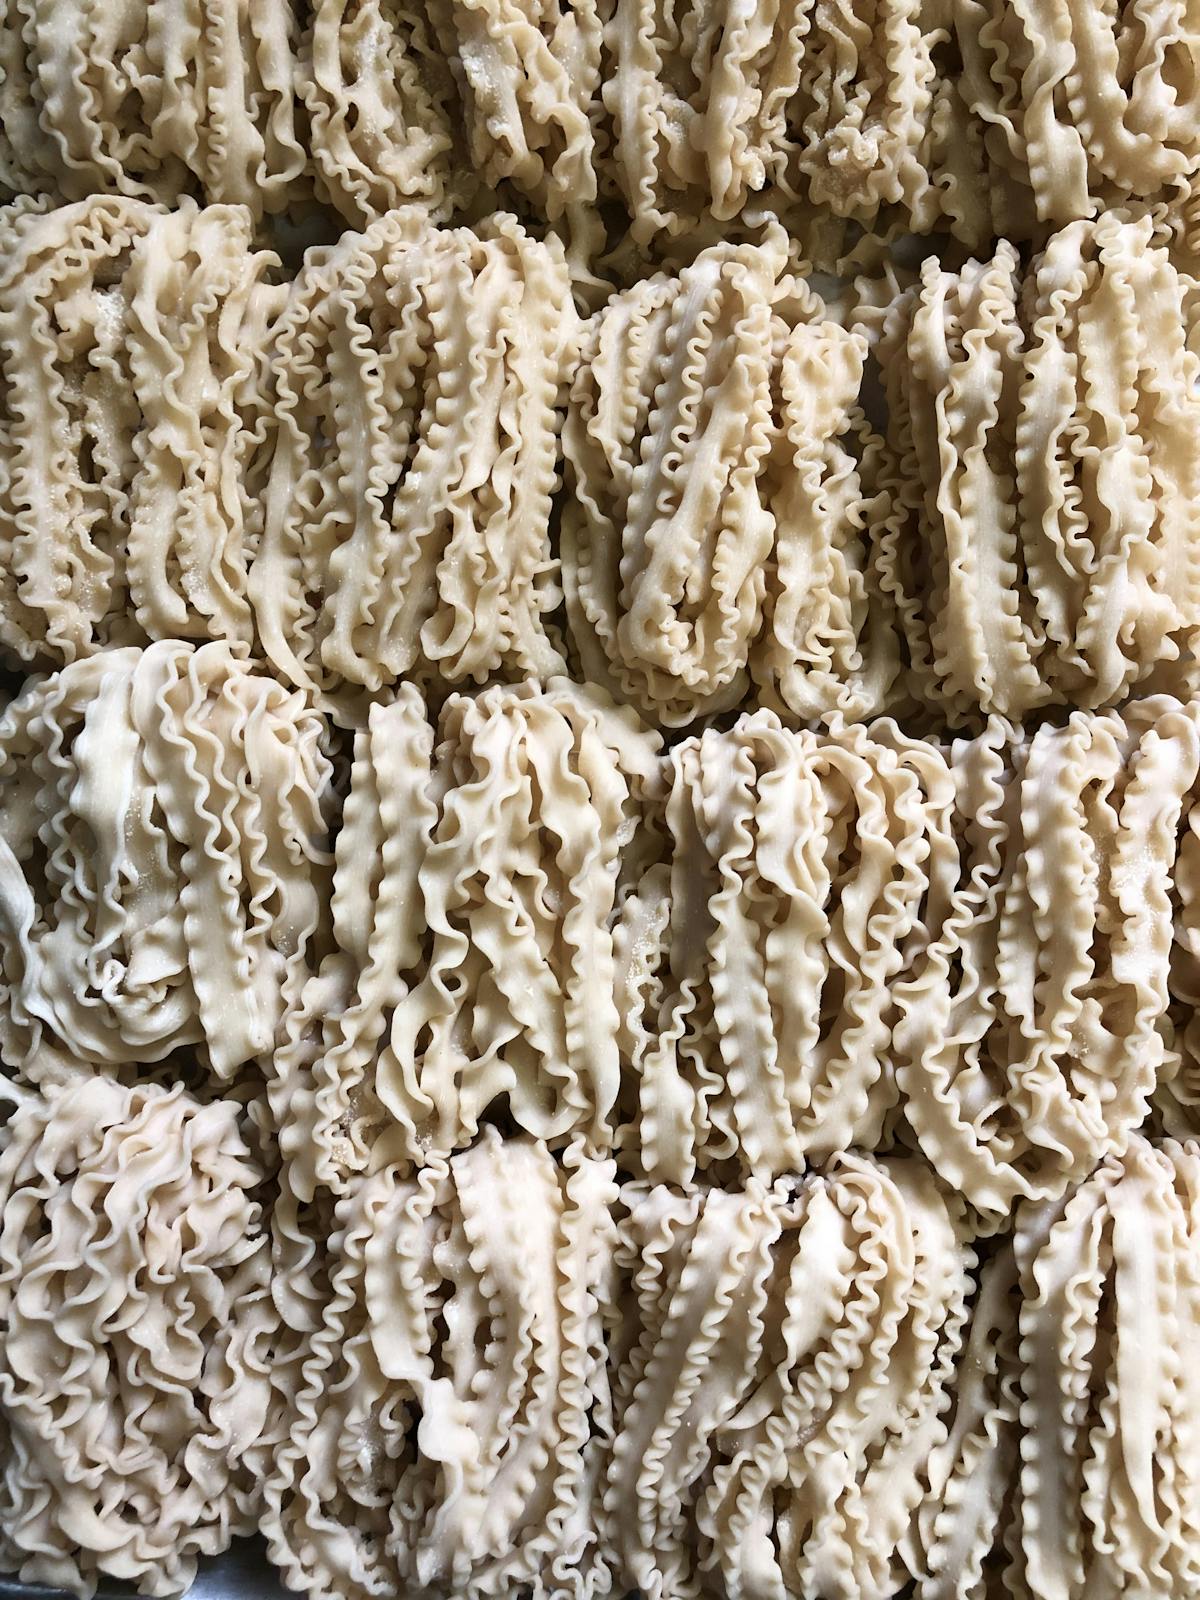 a close up of a pasta